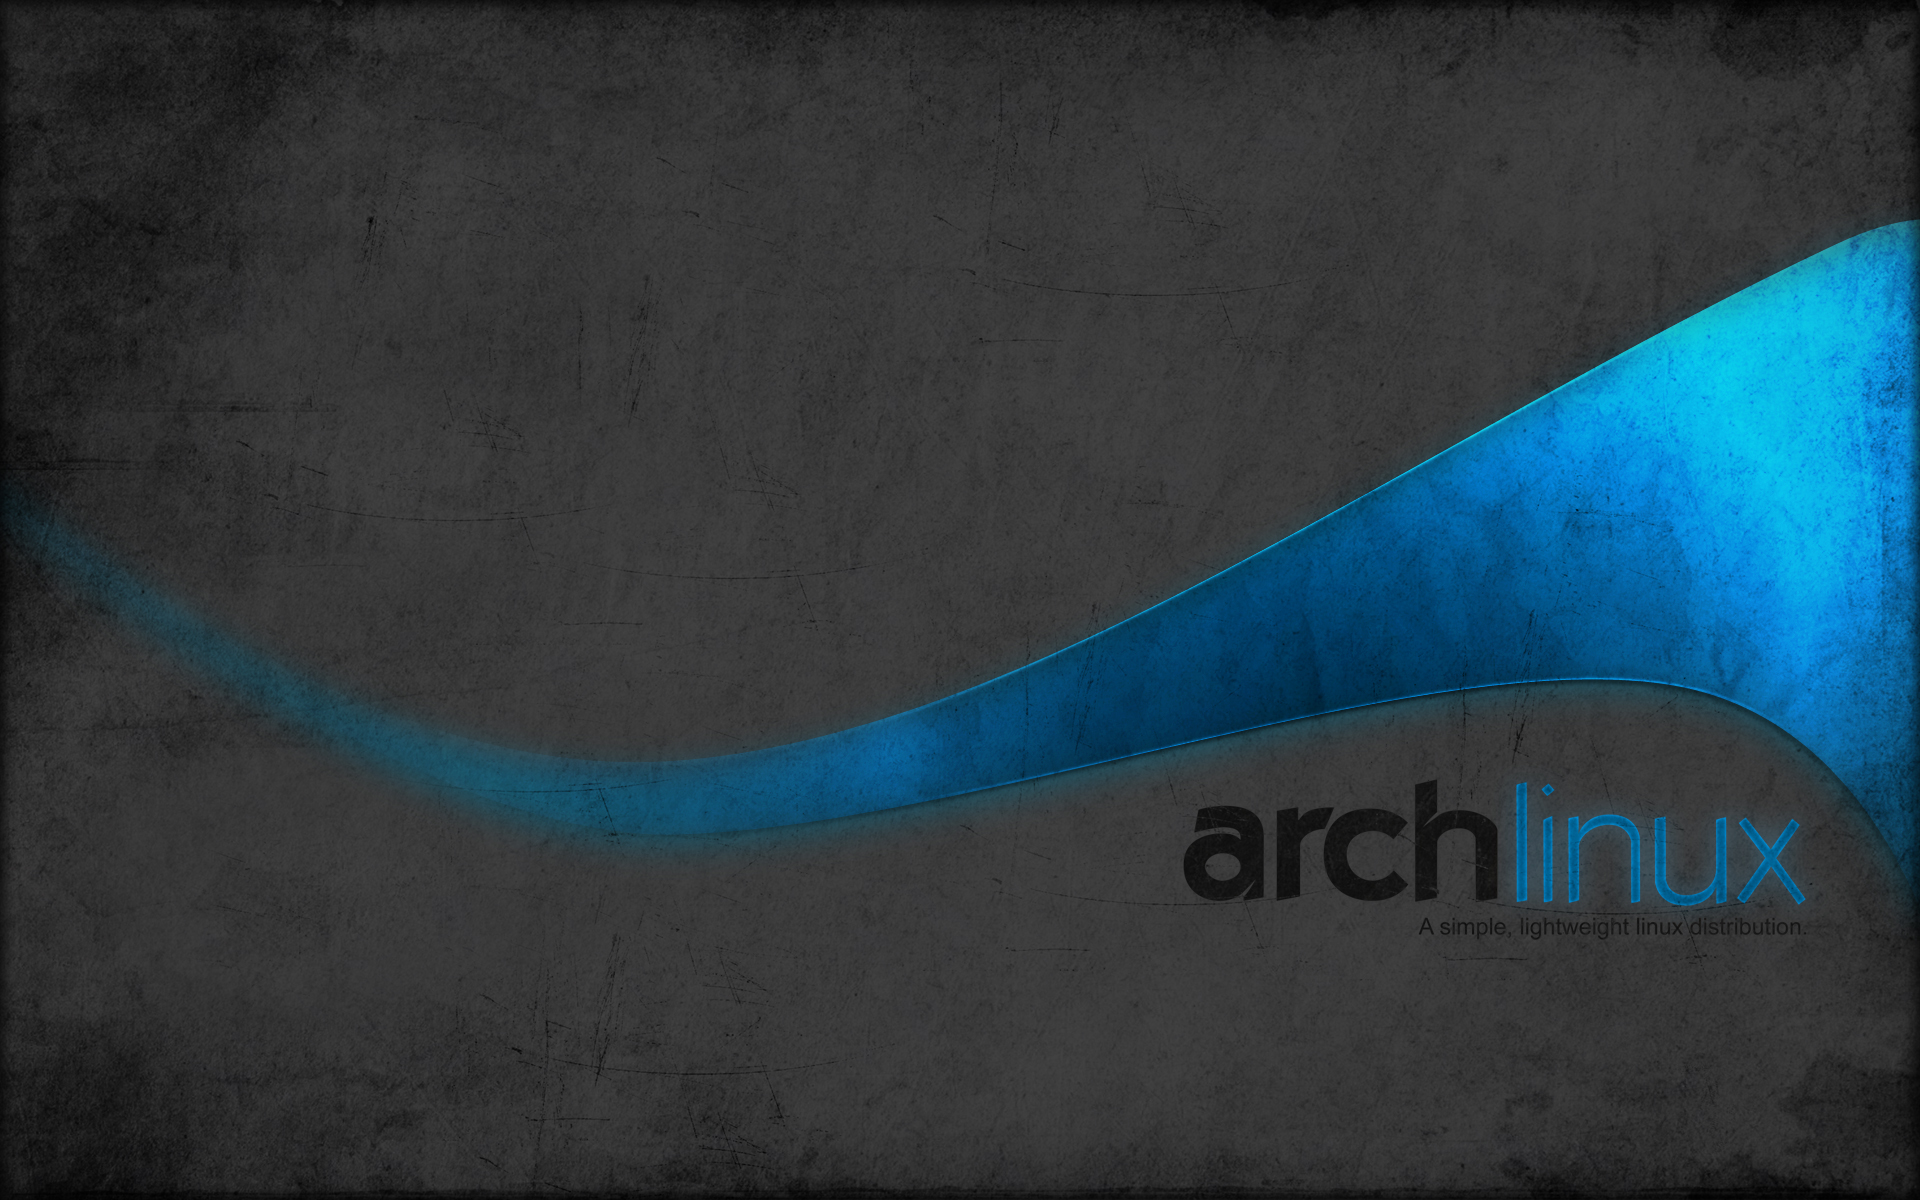 Linux, Arch Linux - обои на рабочий стол